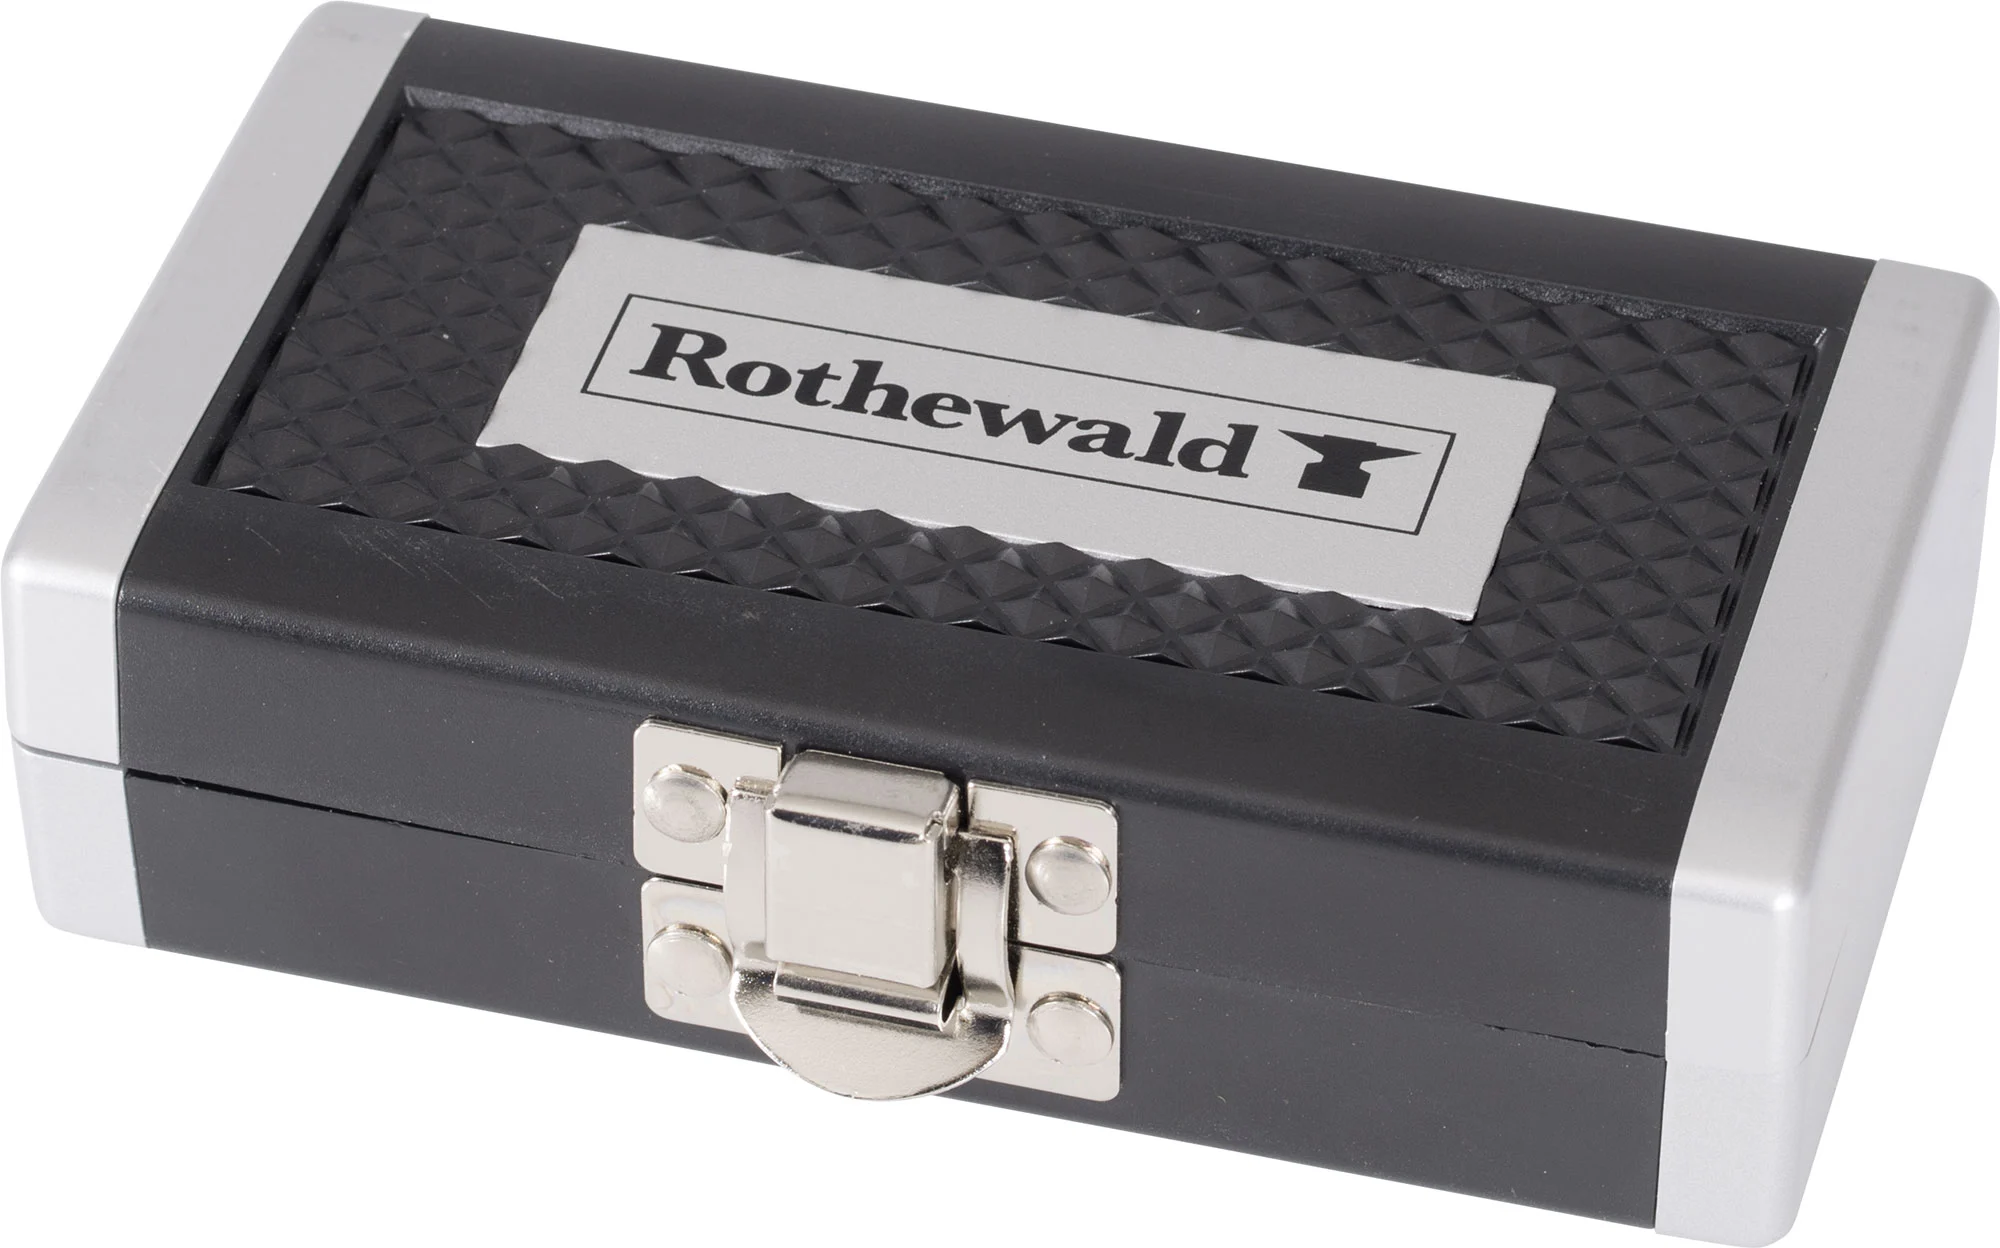 Rothewald DREHWINKEL-MESSGERAET ROTHEWALD, 1/2 ZOLL